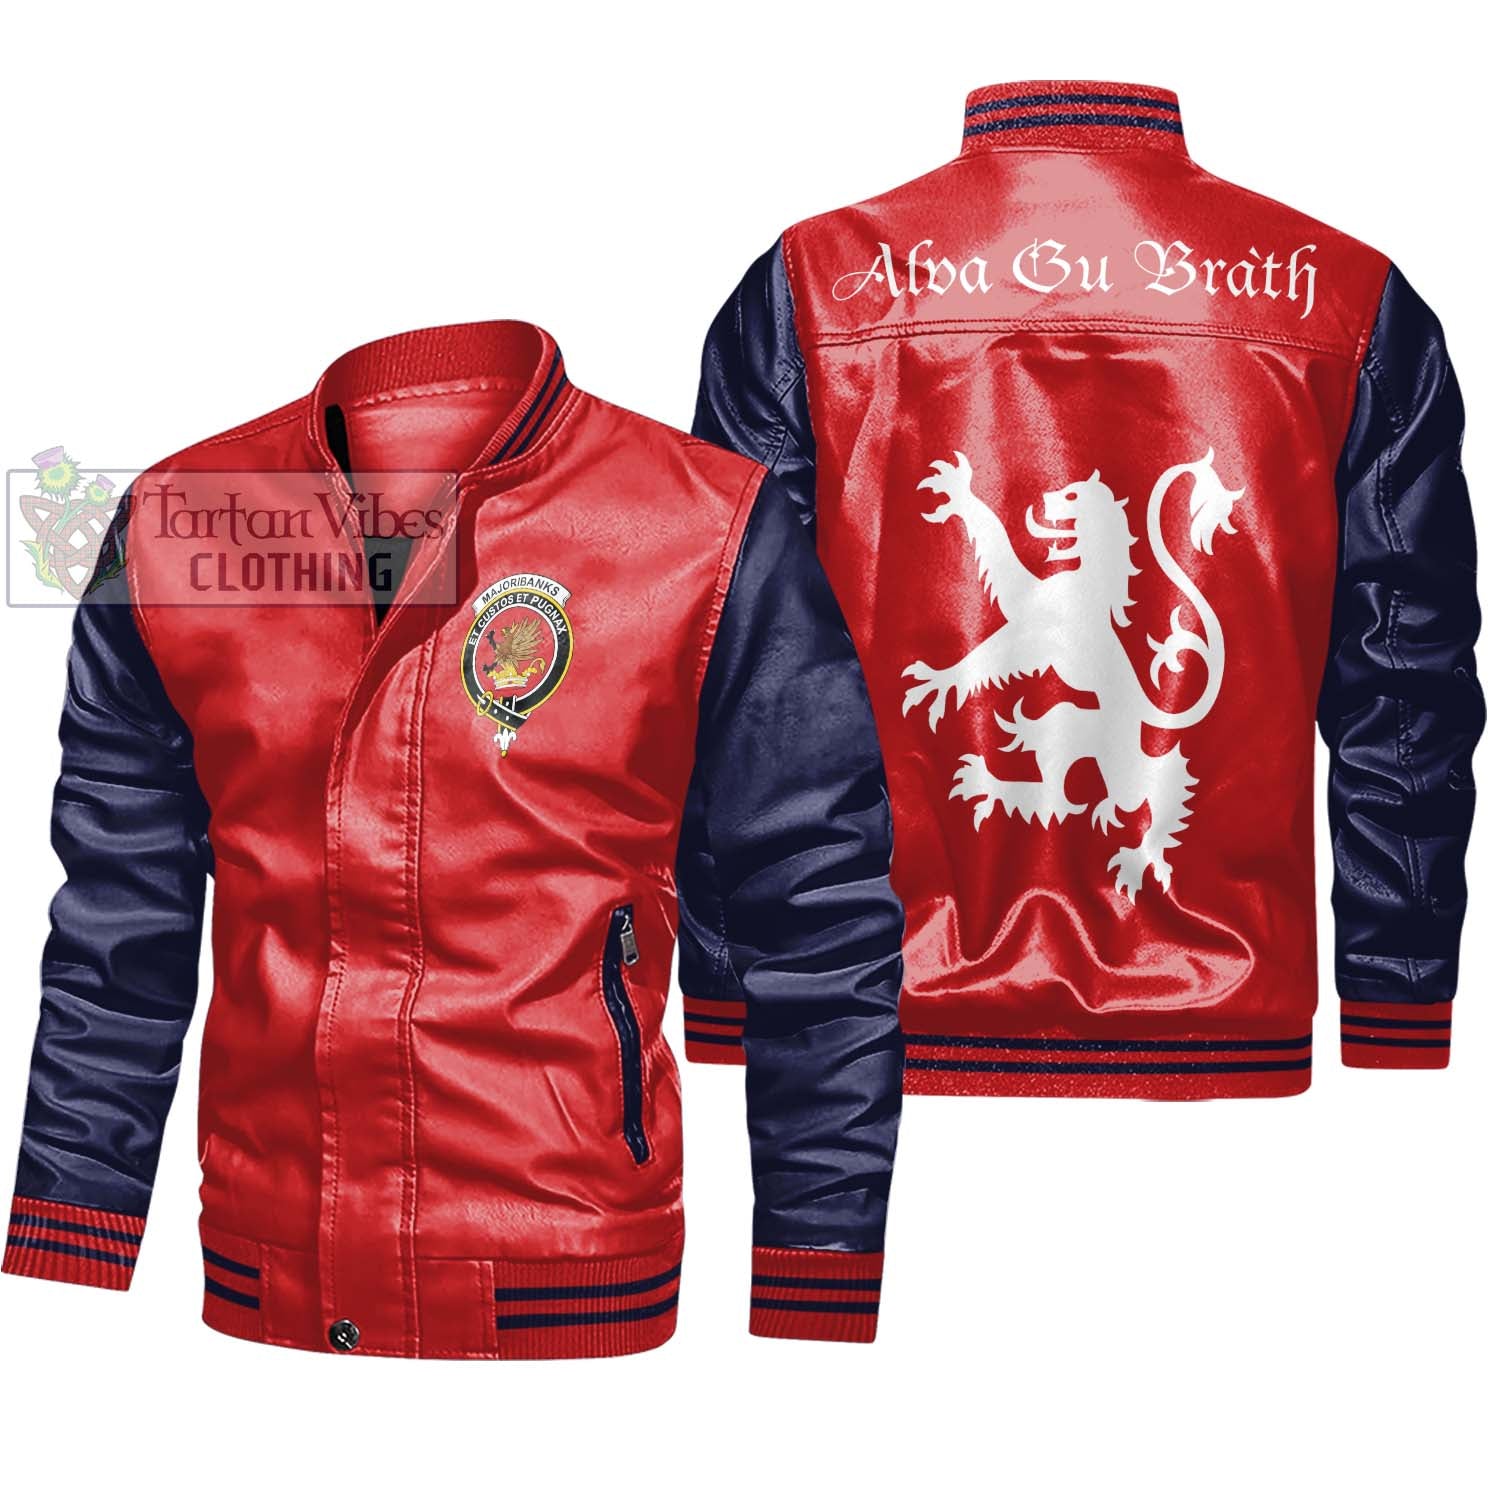 Tartan Vibes Clothing Majoribanks Family Crest Leather Bomber Jacket Lion Rampant Alba Gu Brath Style